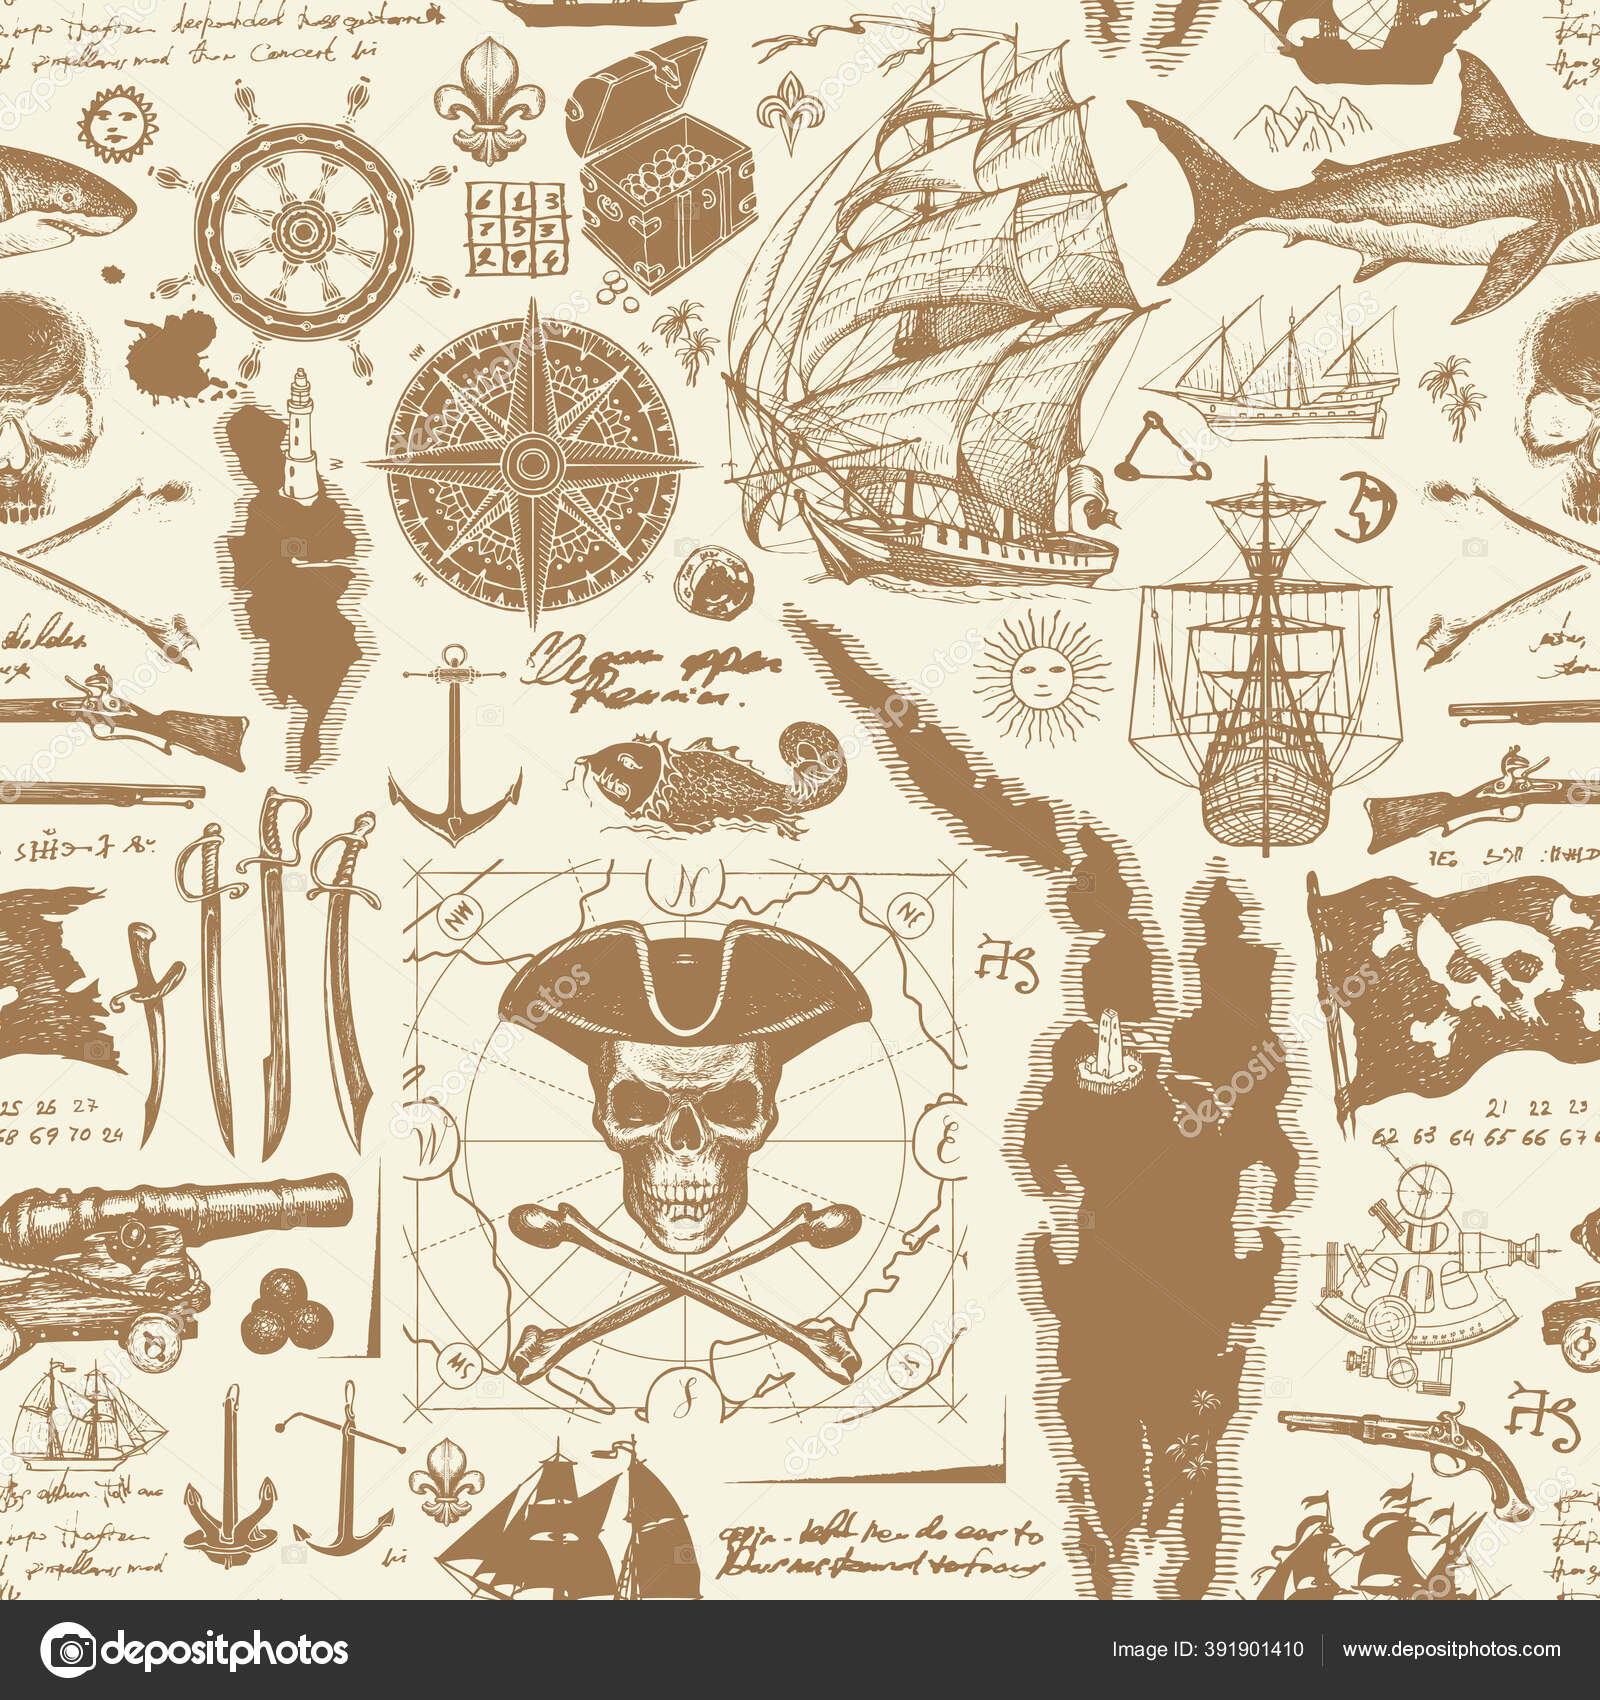 https://st4.depositphotos.com/1536490/39190/v/1600/depositphotos_391901410-stock-illustration-vintage-seamless-pattern-pirates-theme.jpg